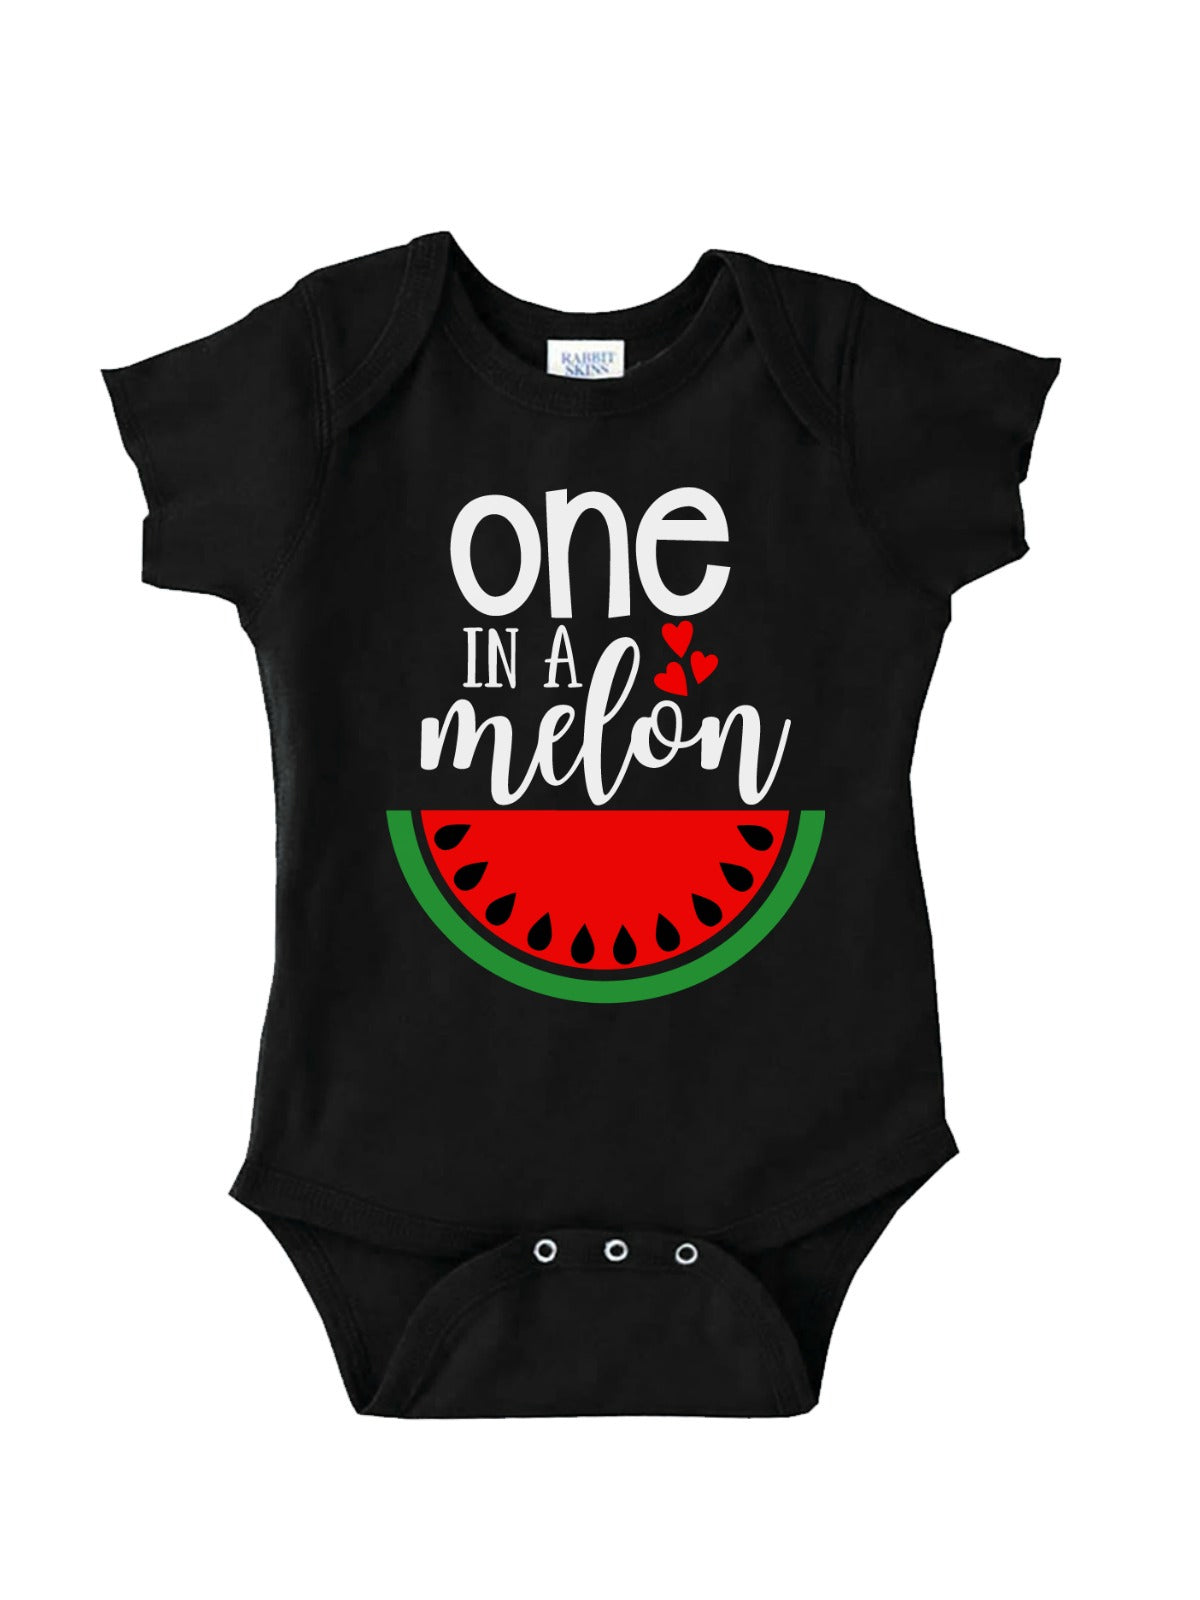 One in a Melon baby bodysuit in black